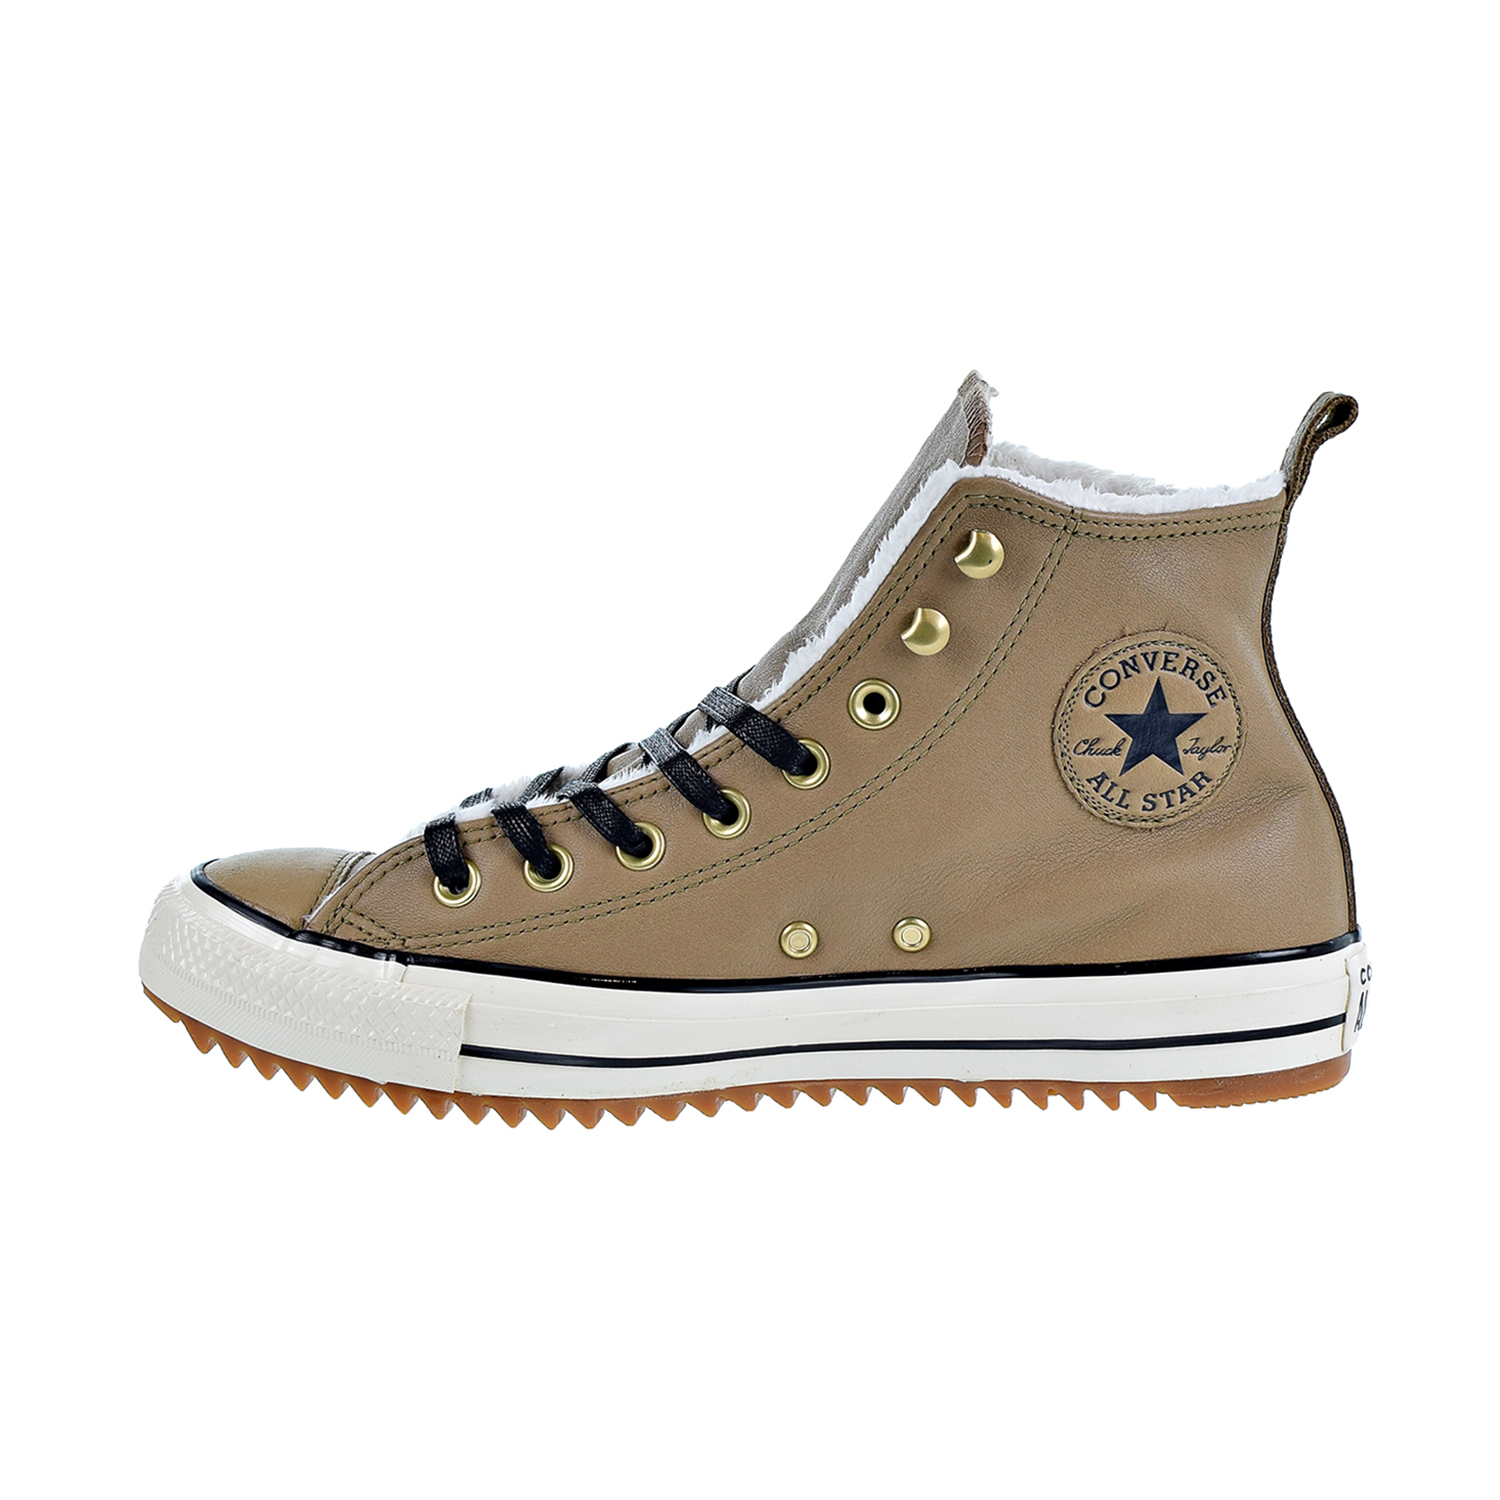 Converse Chuck Taylor All Star Hiker Boot Hi Unisex/Men's Shoes Teak-Black-Ivory 162479c - image 4 of 6